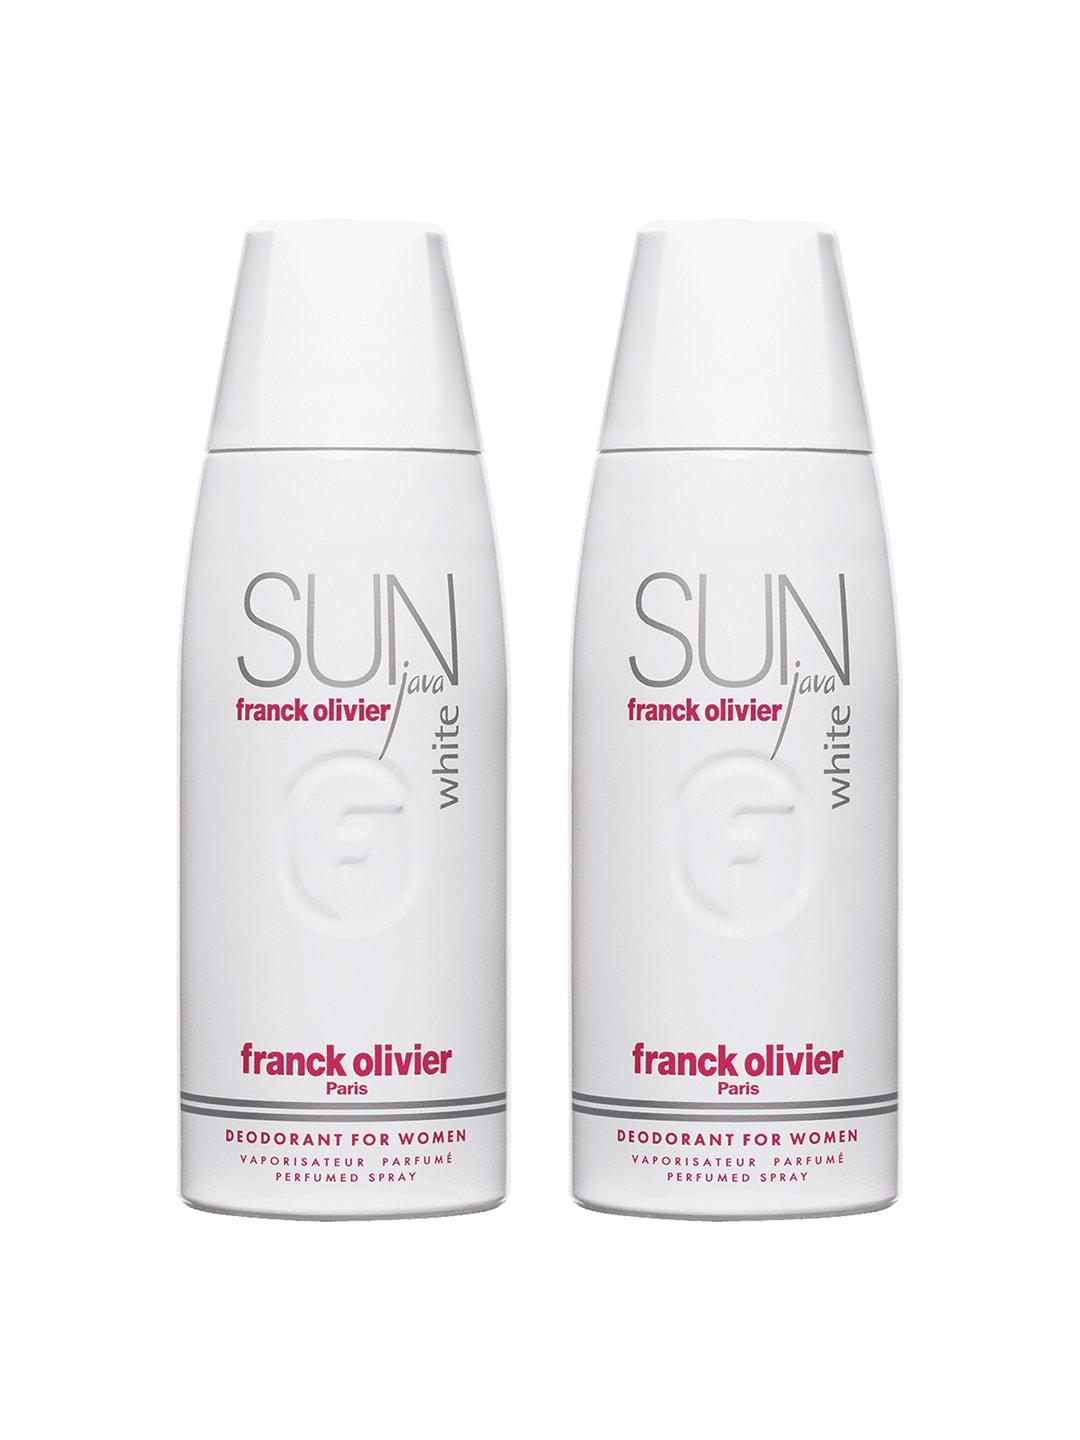 franck olivier women set of 2 sun java white odour control deodorant spray - 250 ml each